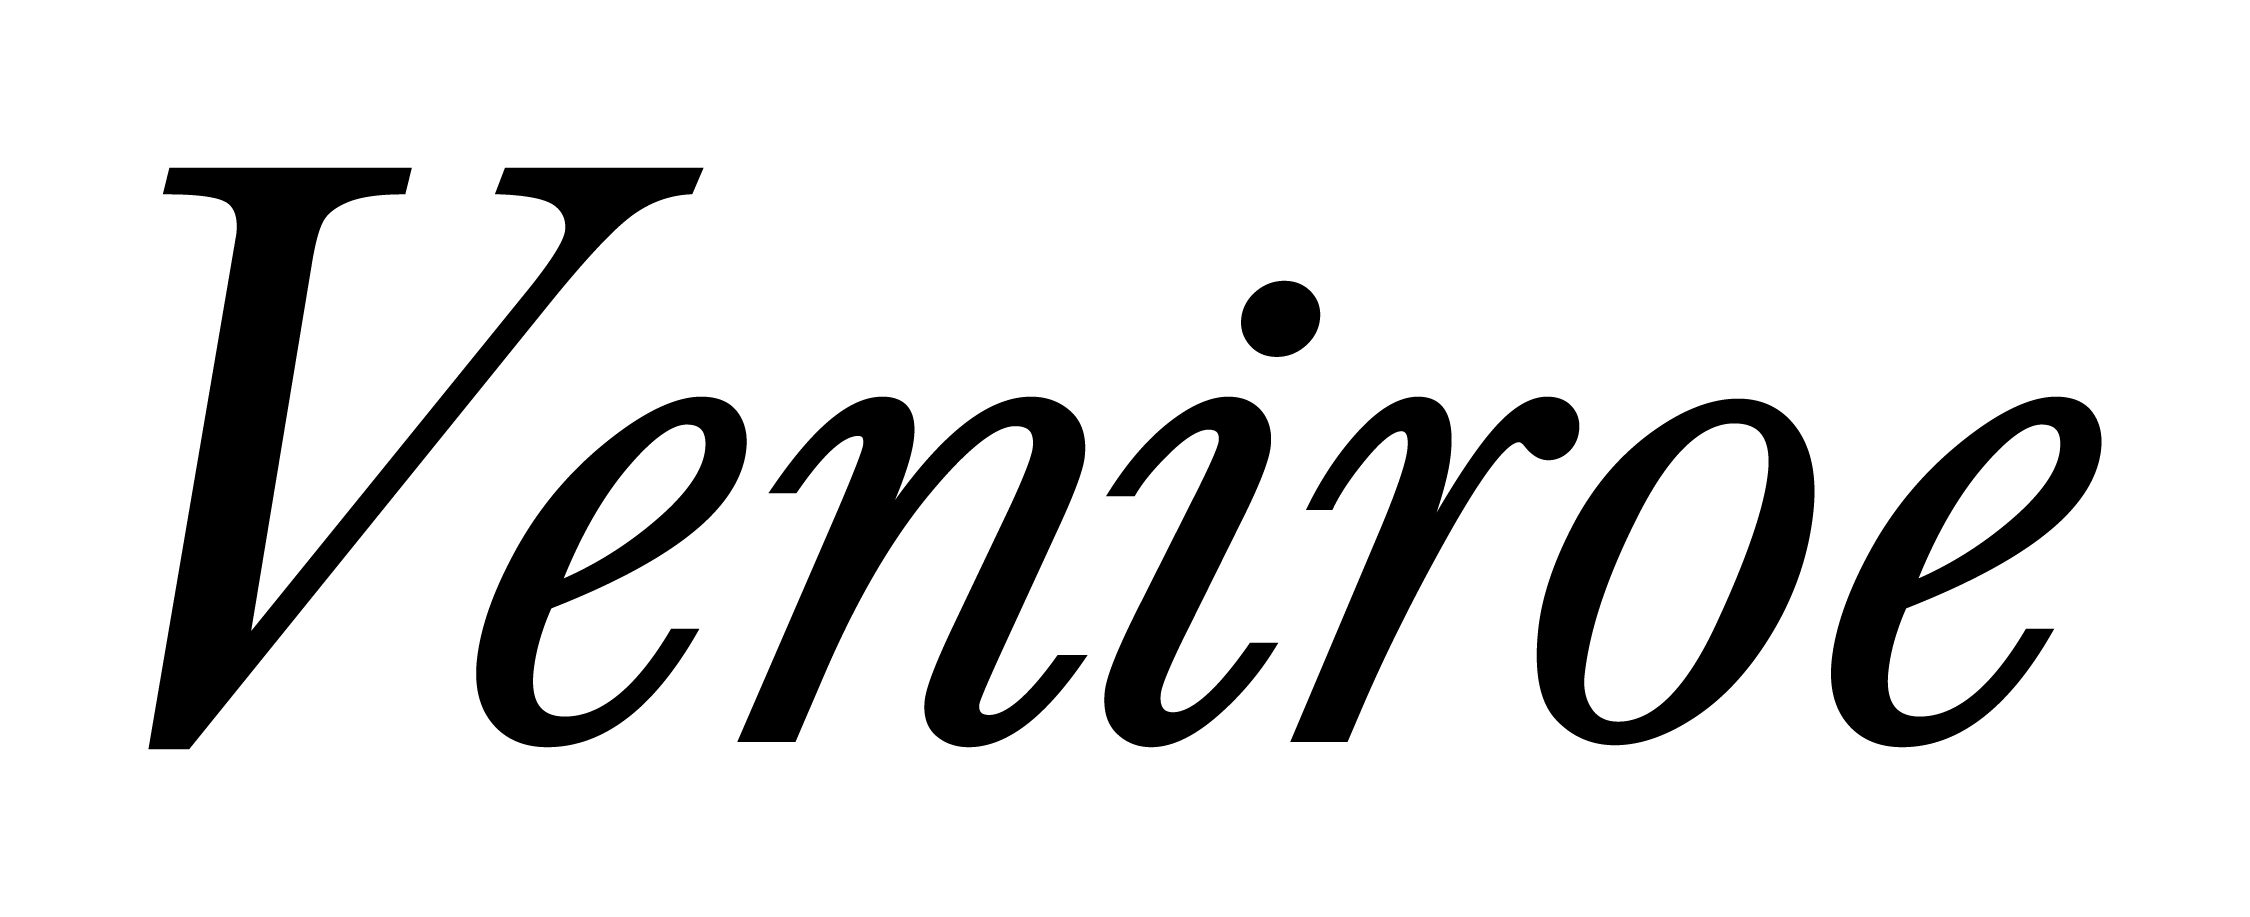 Veniroe text logo in black